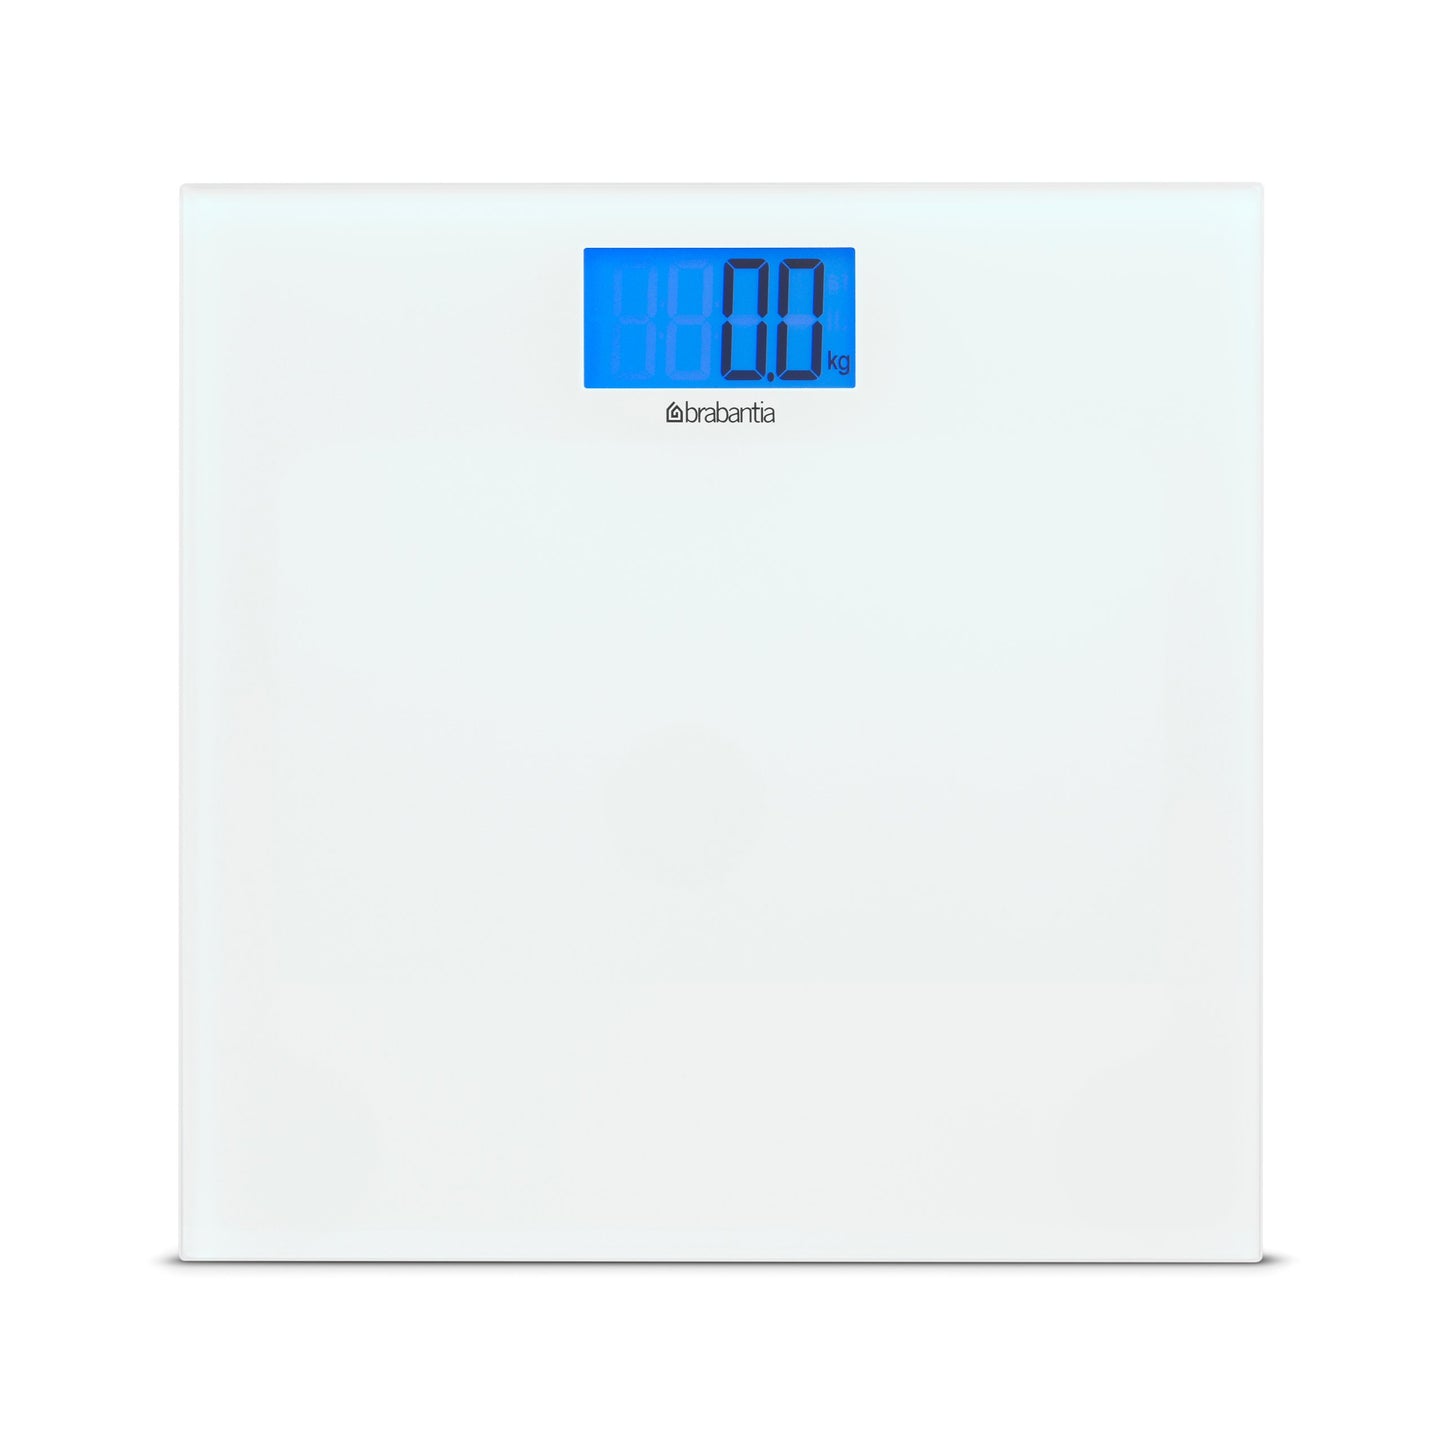 Brabantia Digital Bathroom Scale - White